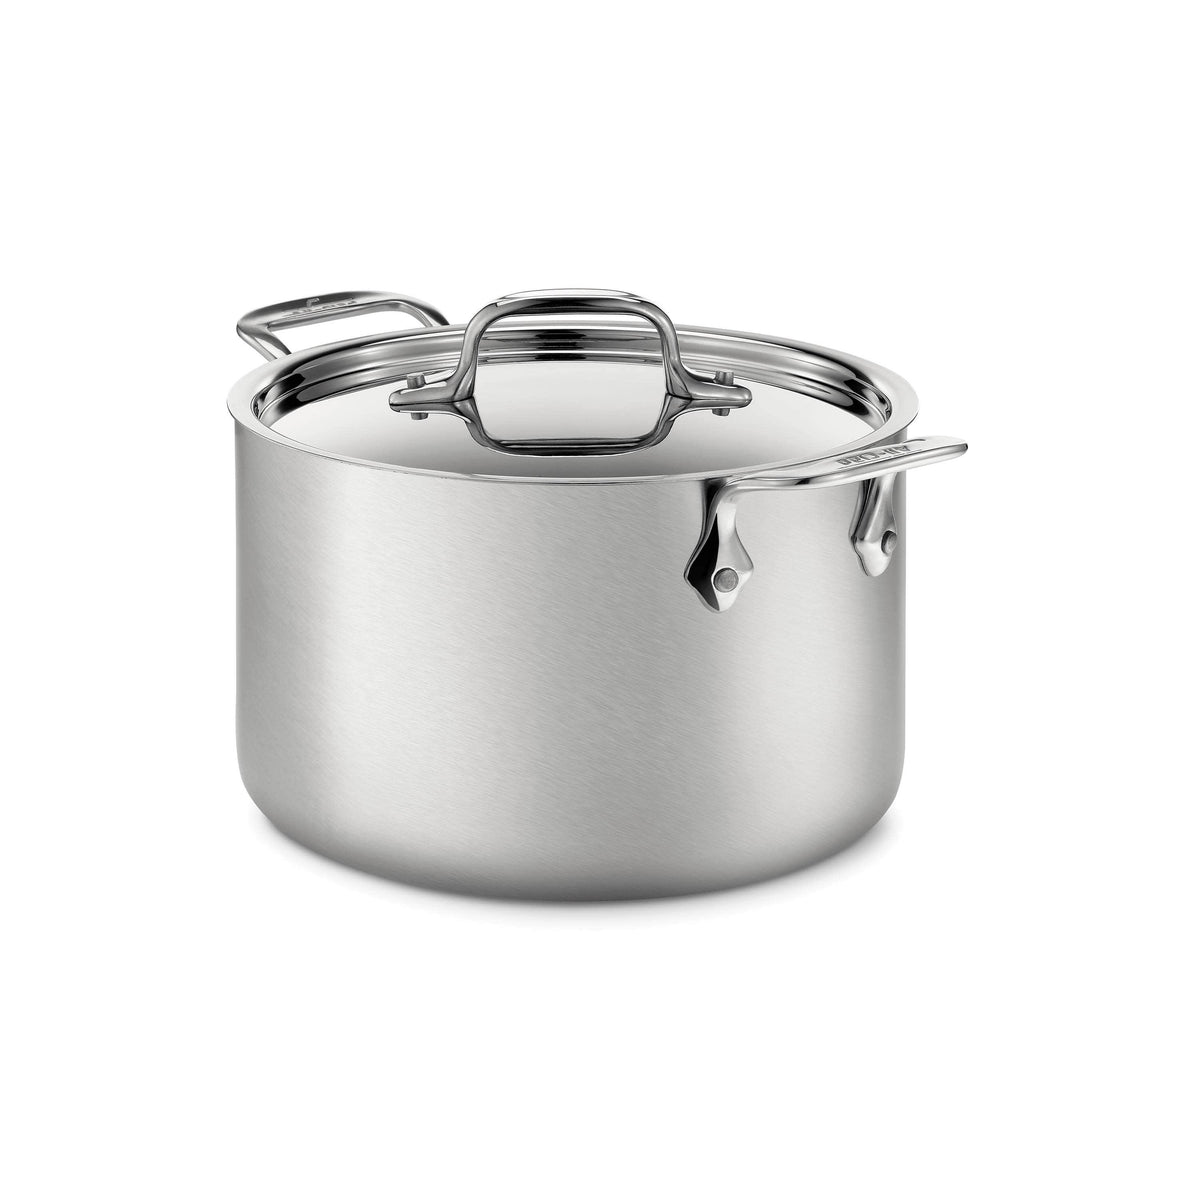 41 fl oz Teapot SS Cool Grey BELLA RONDE – Gourmet Kitchenworks